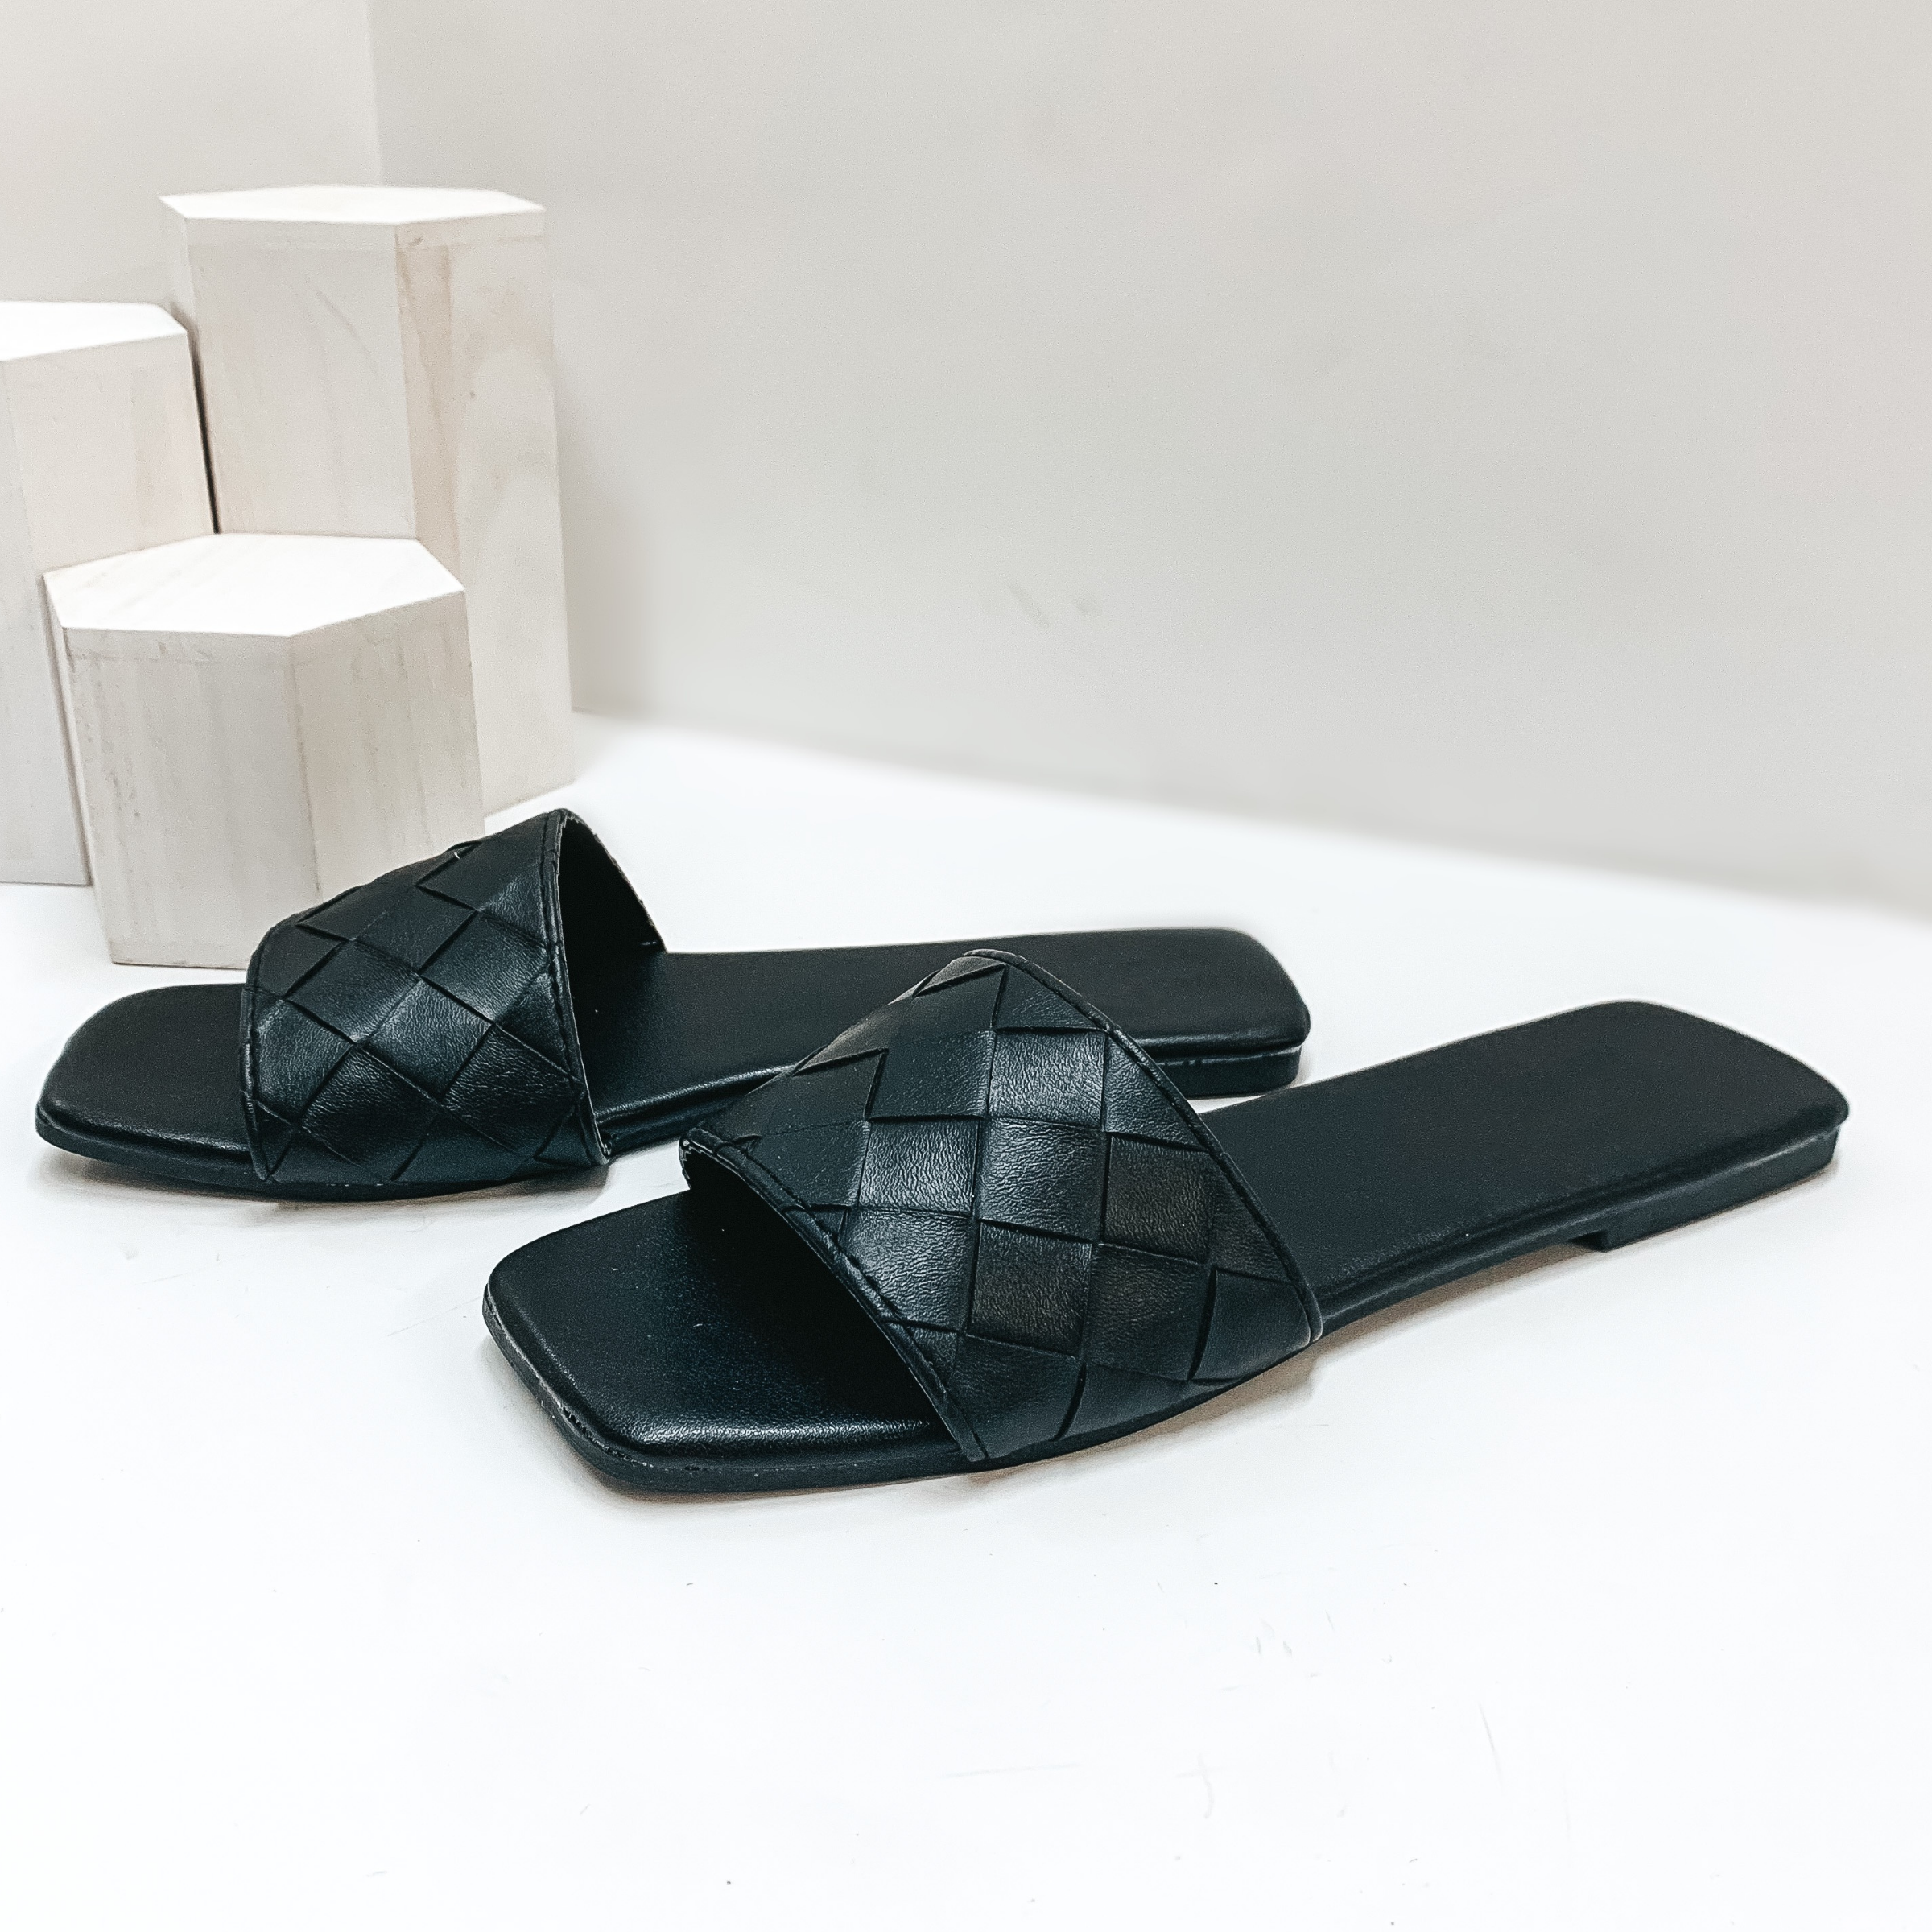 Always Looking Up Basket Weave One Strap Slide On Sandals in Black - Giddy Up Glamour Boutique